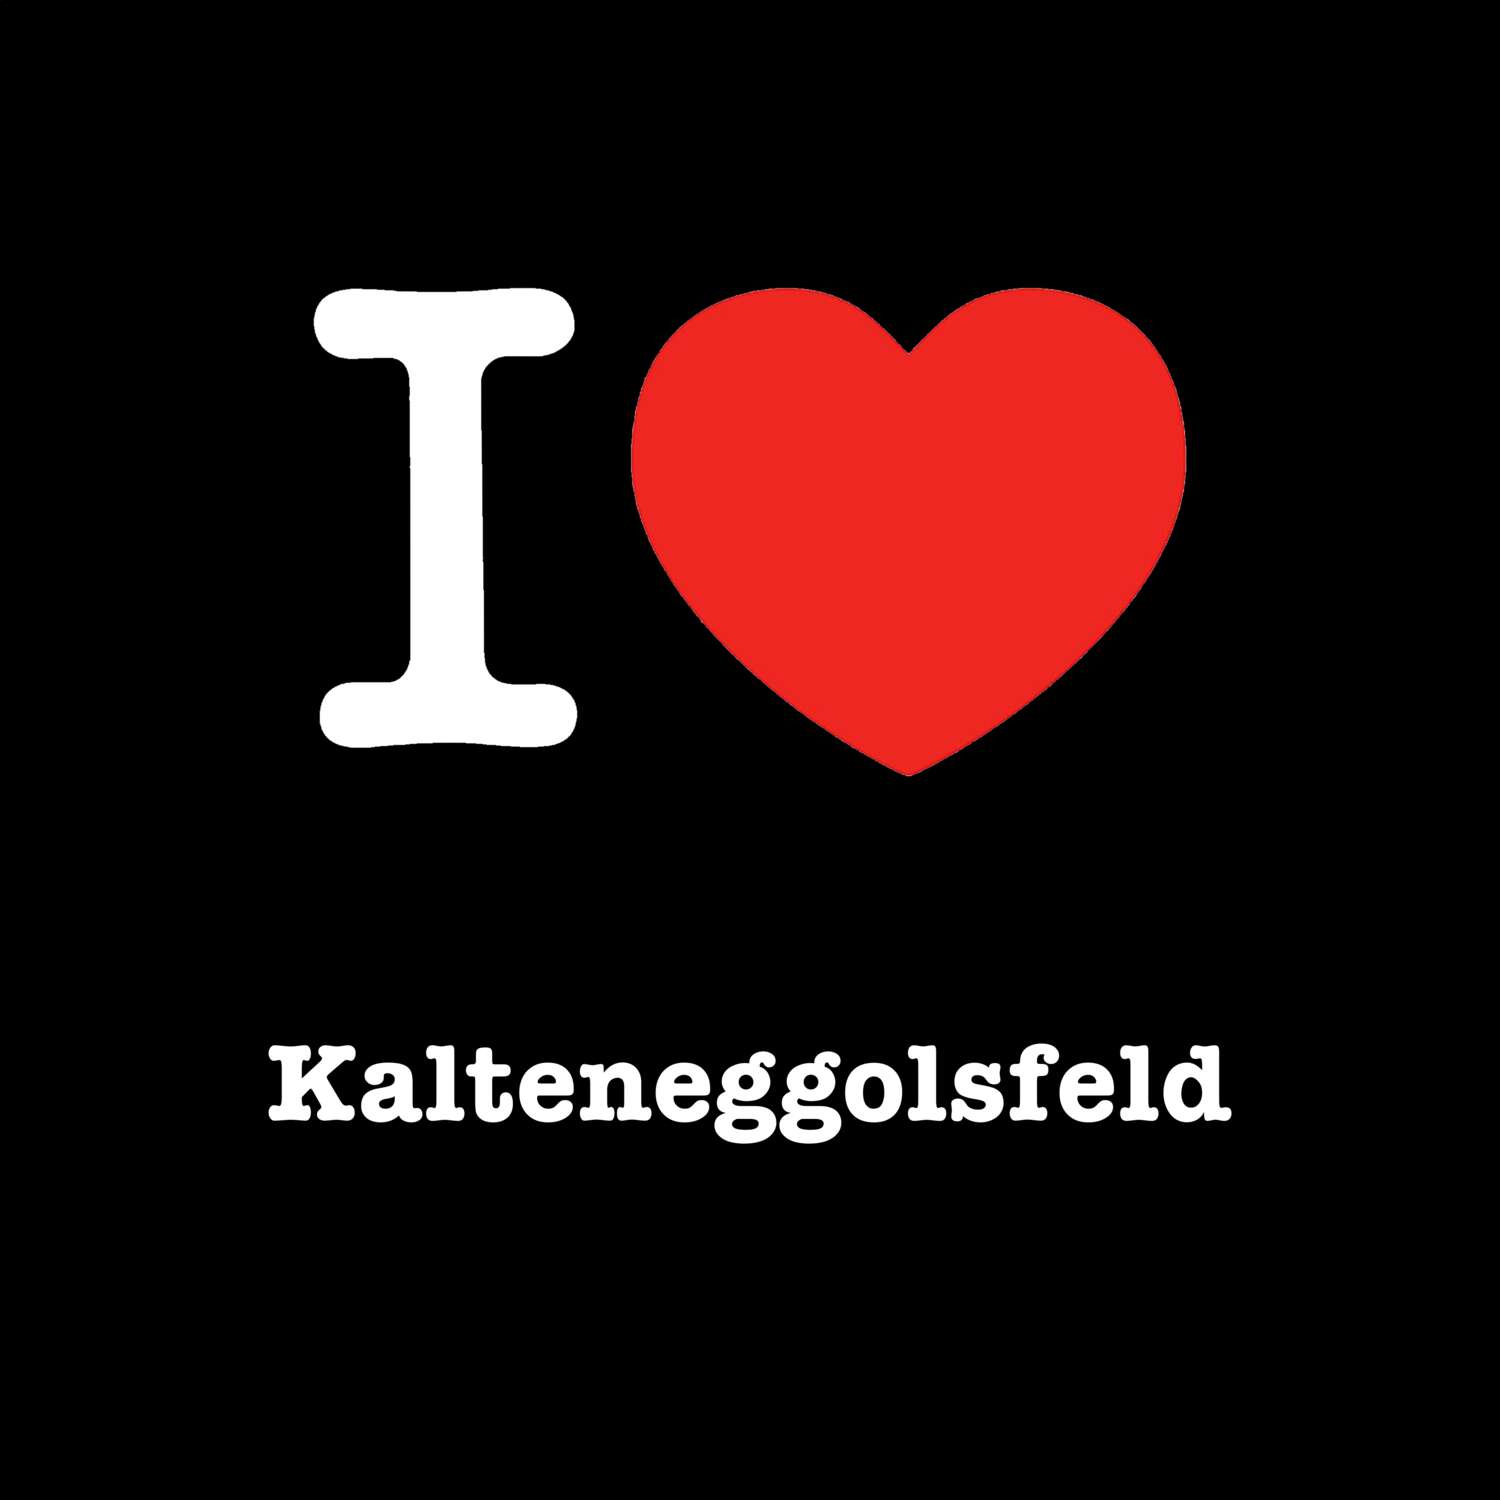 Kalteneggolsfeld T-Shirt »I love«